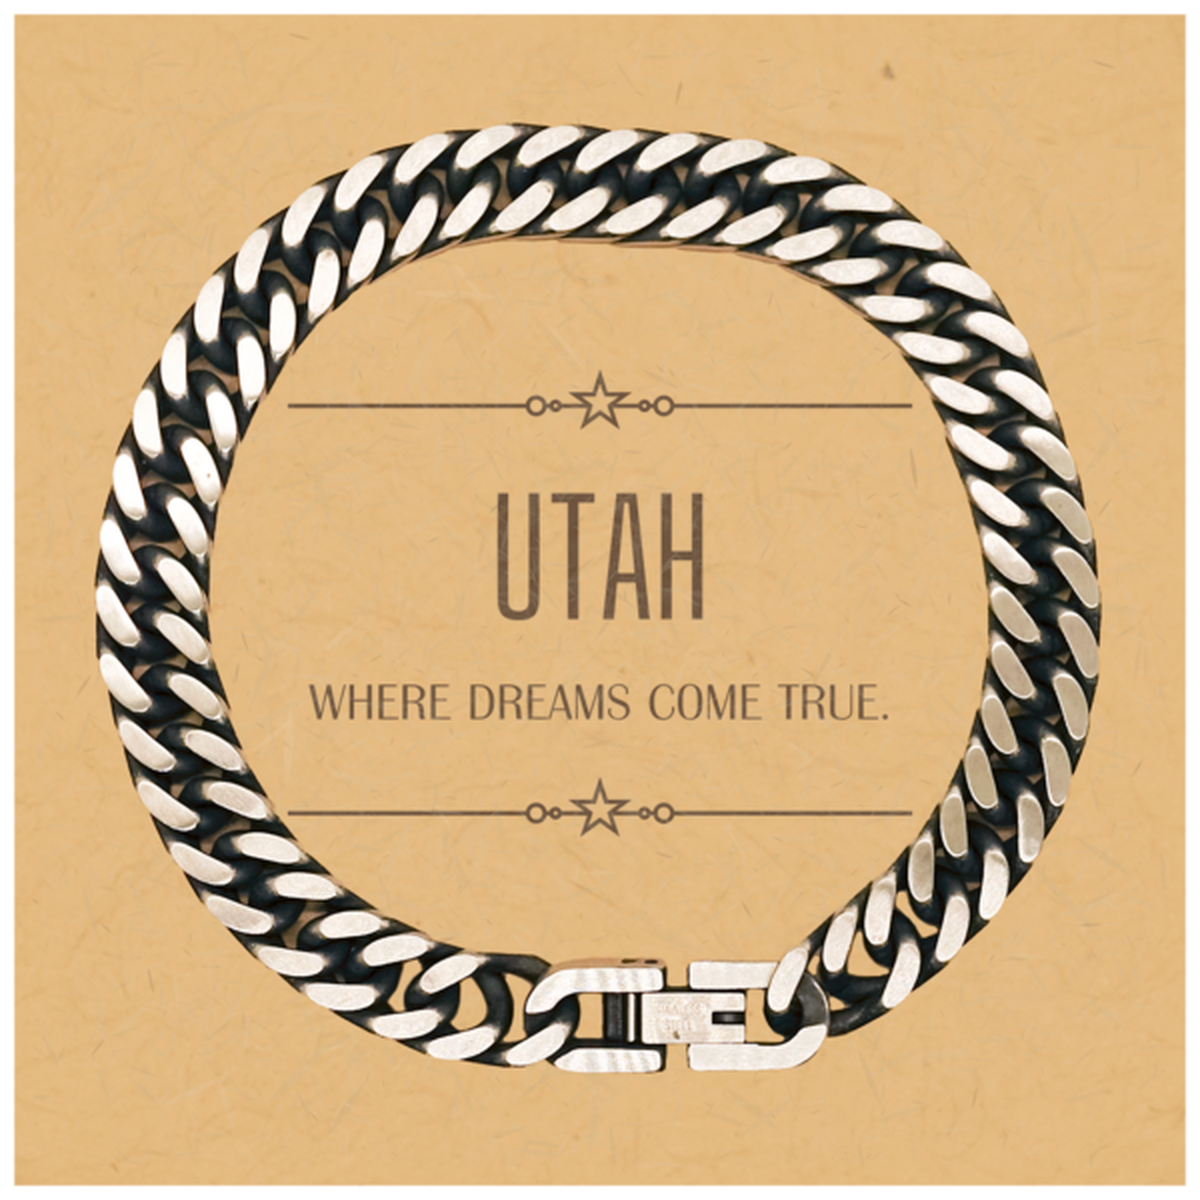 Love Utah State Cuban Link Chain Bracelet, Utah Where dreams come true, Birthday Christmas Inspirational Gifts For Utah Men, Women, Friends